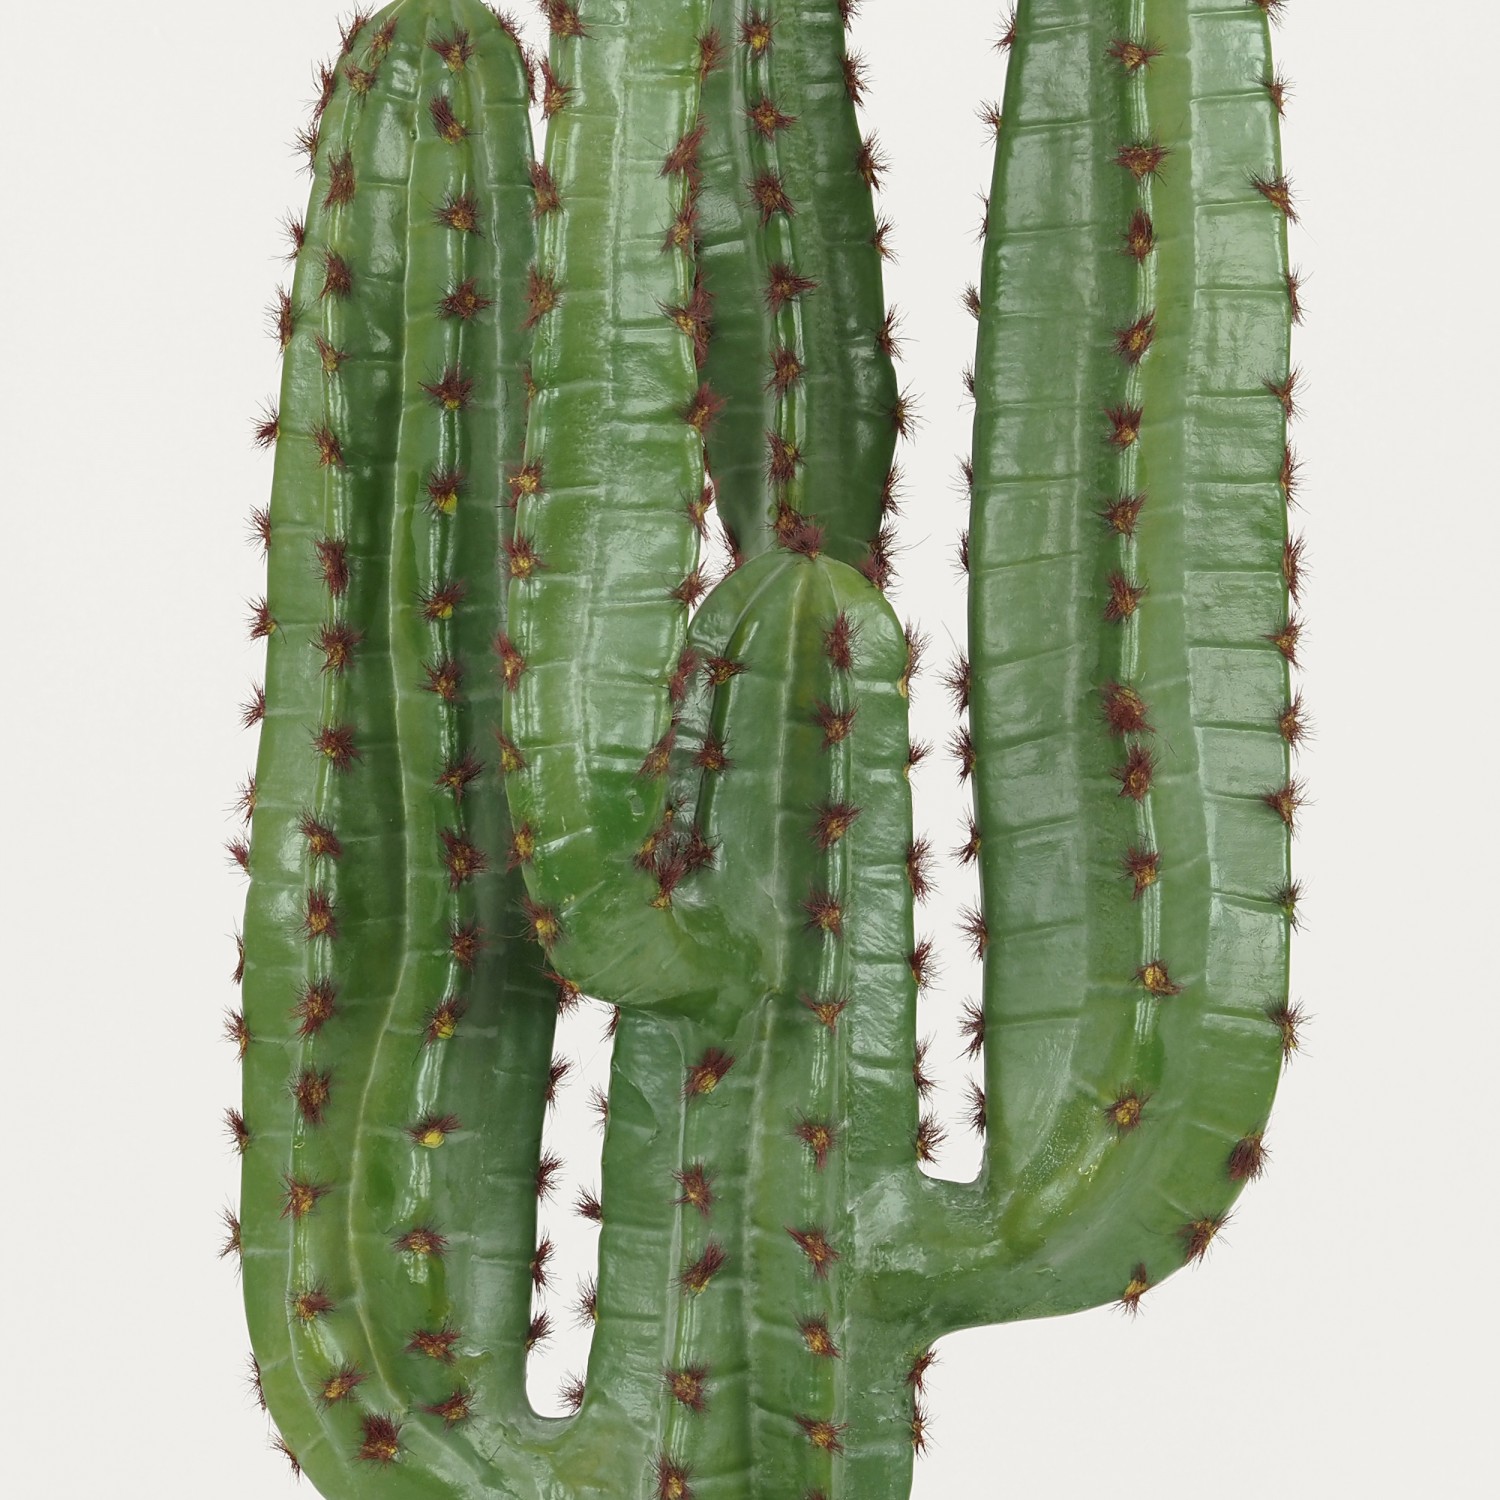 Cactus artificiel euphorbe 70cm focus zoom